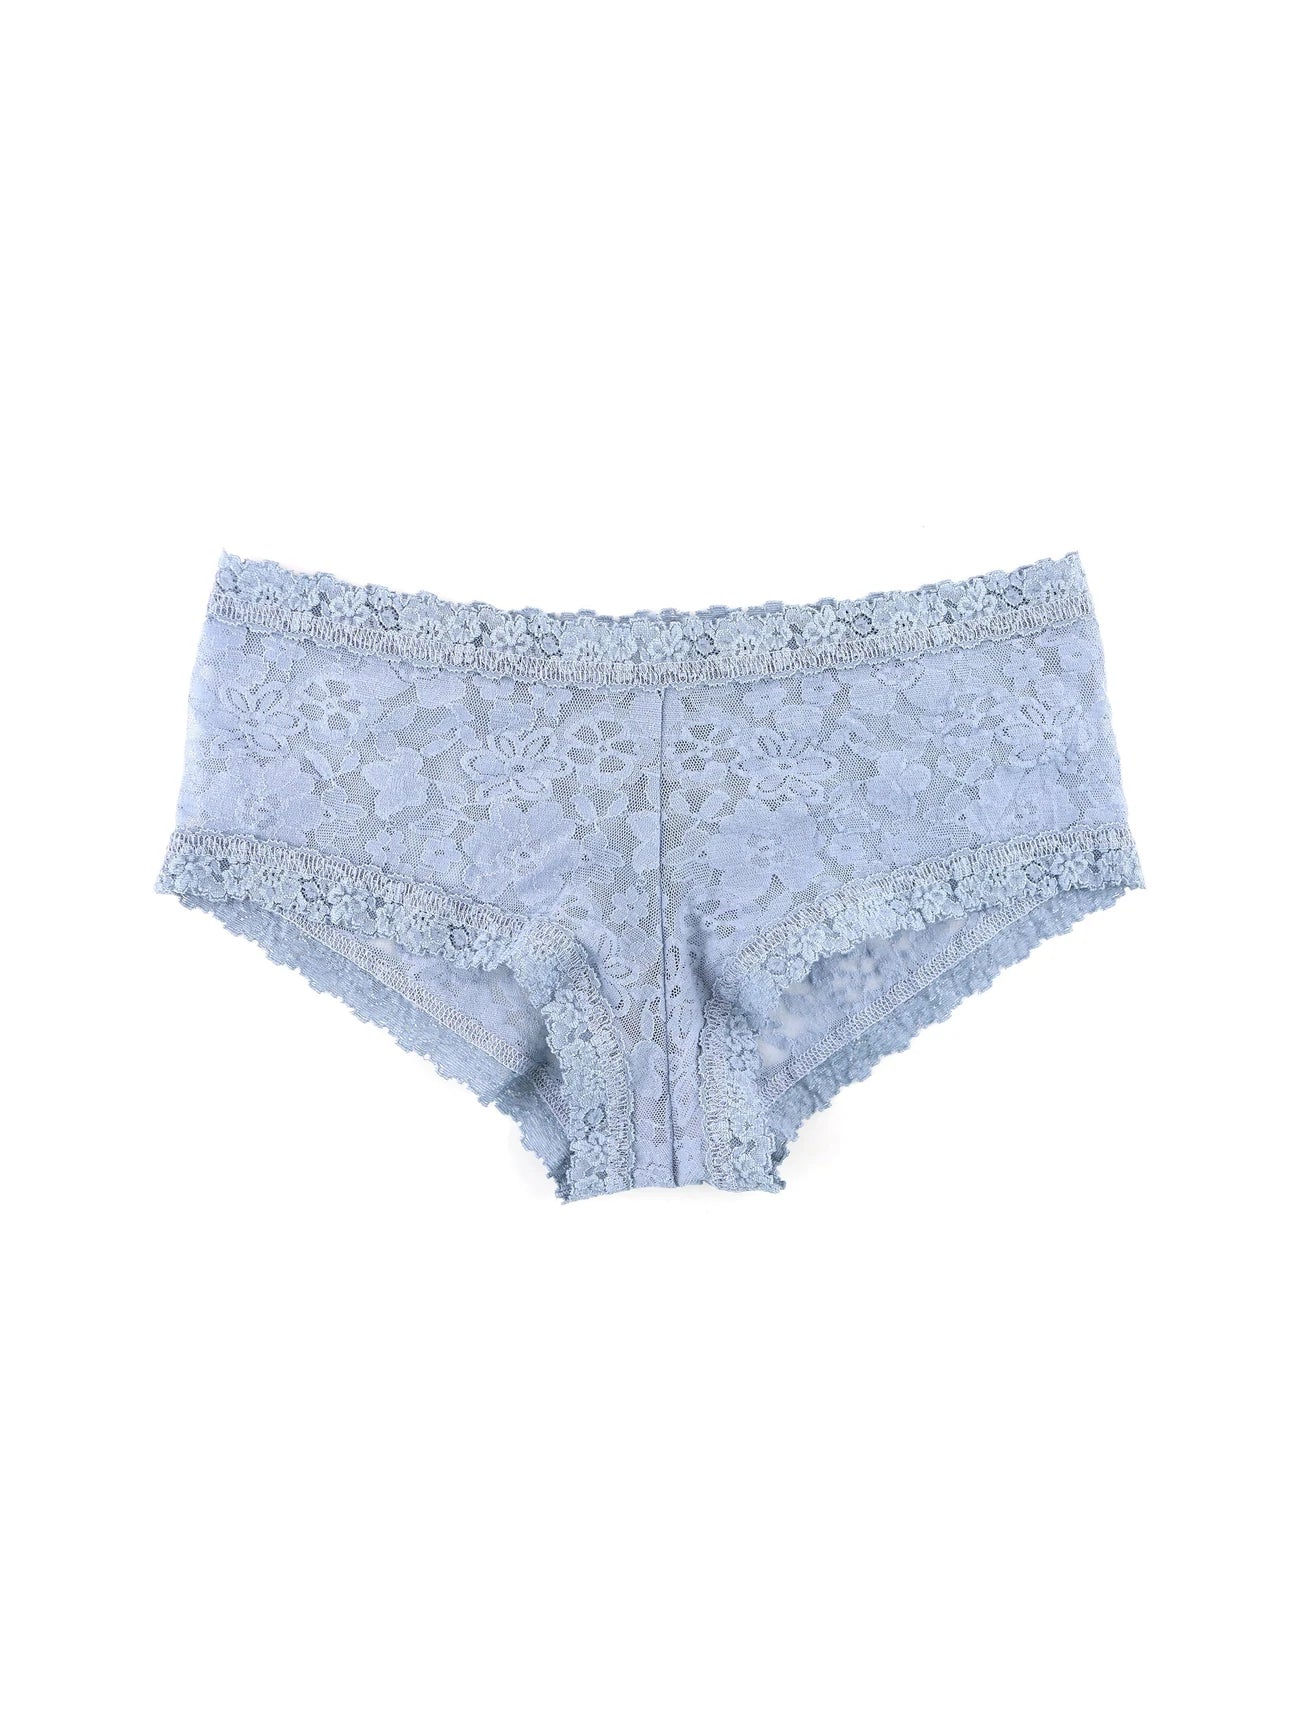 Lace Boyshort Underwear Hanky Panky Grey Mist (GRYM) XS 